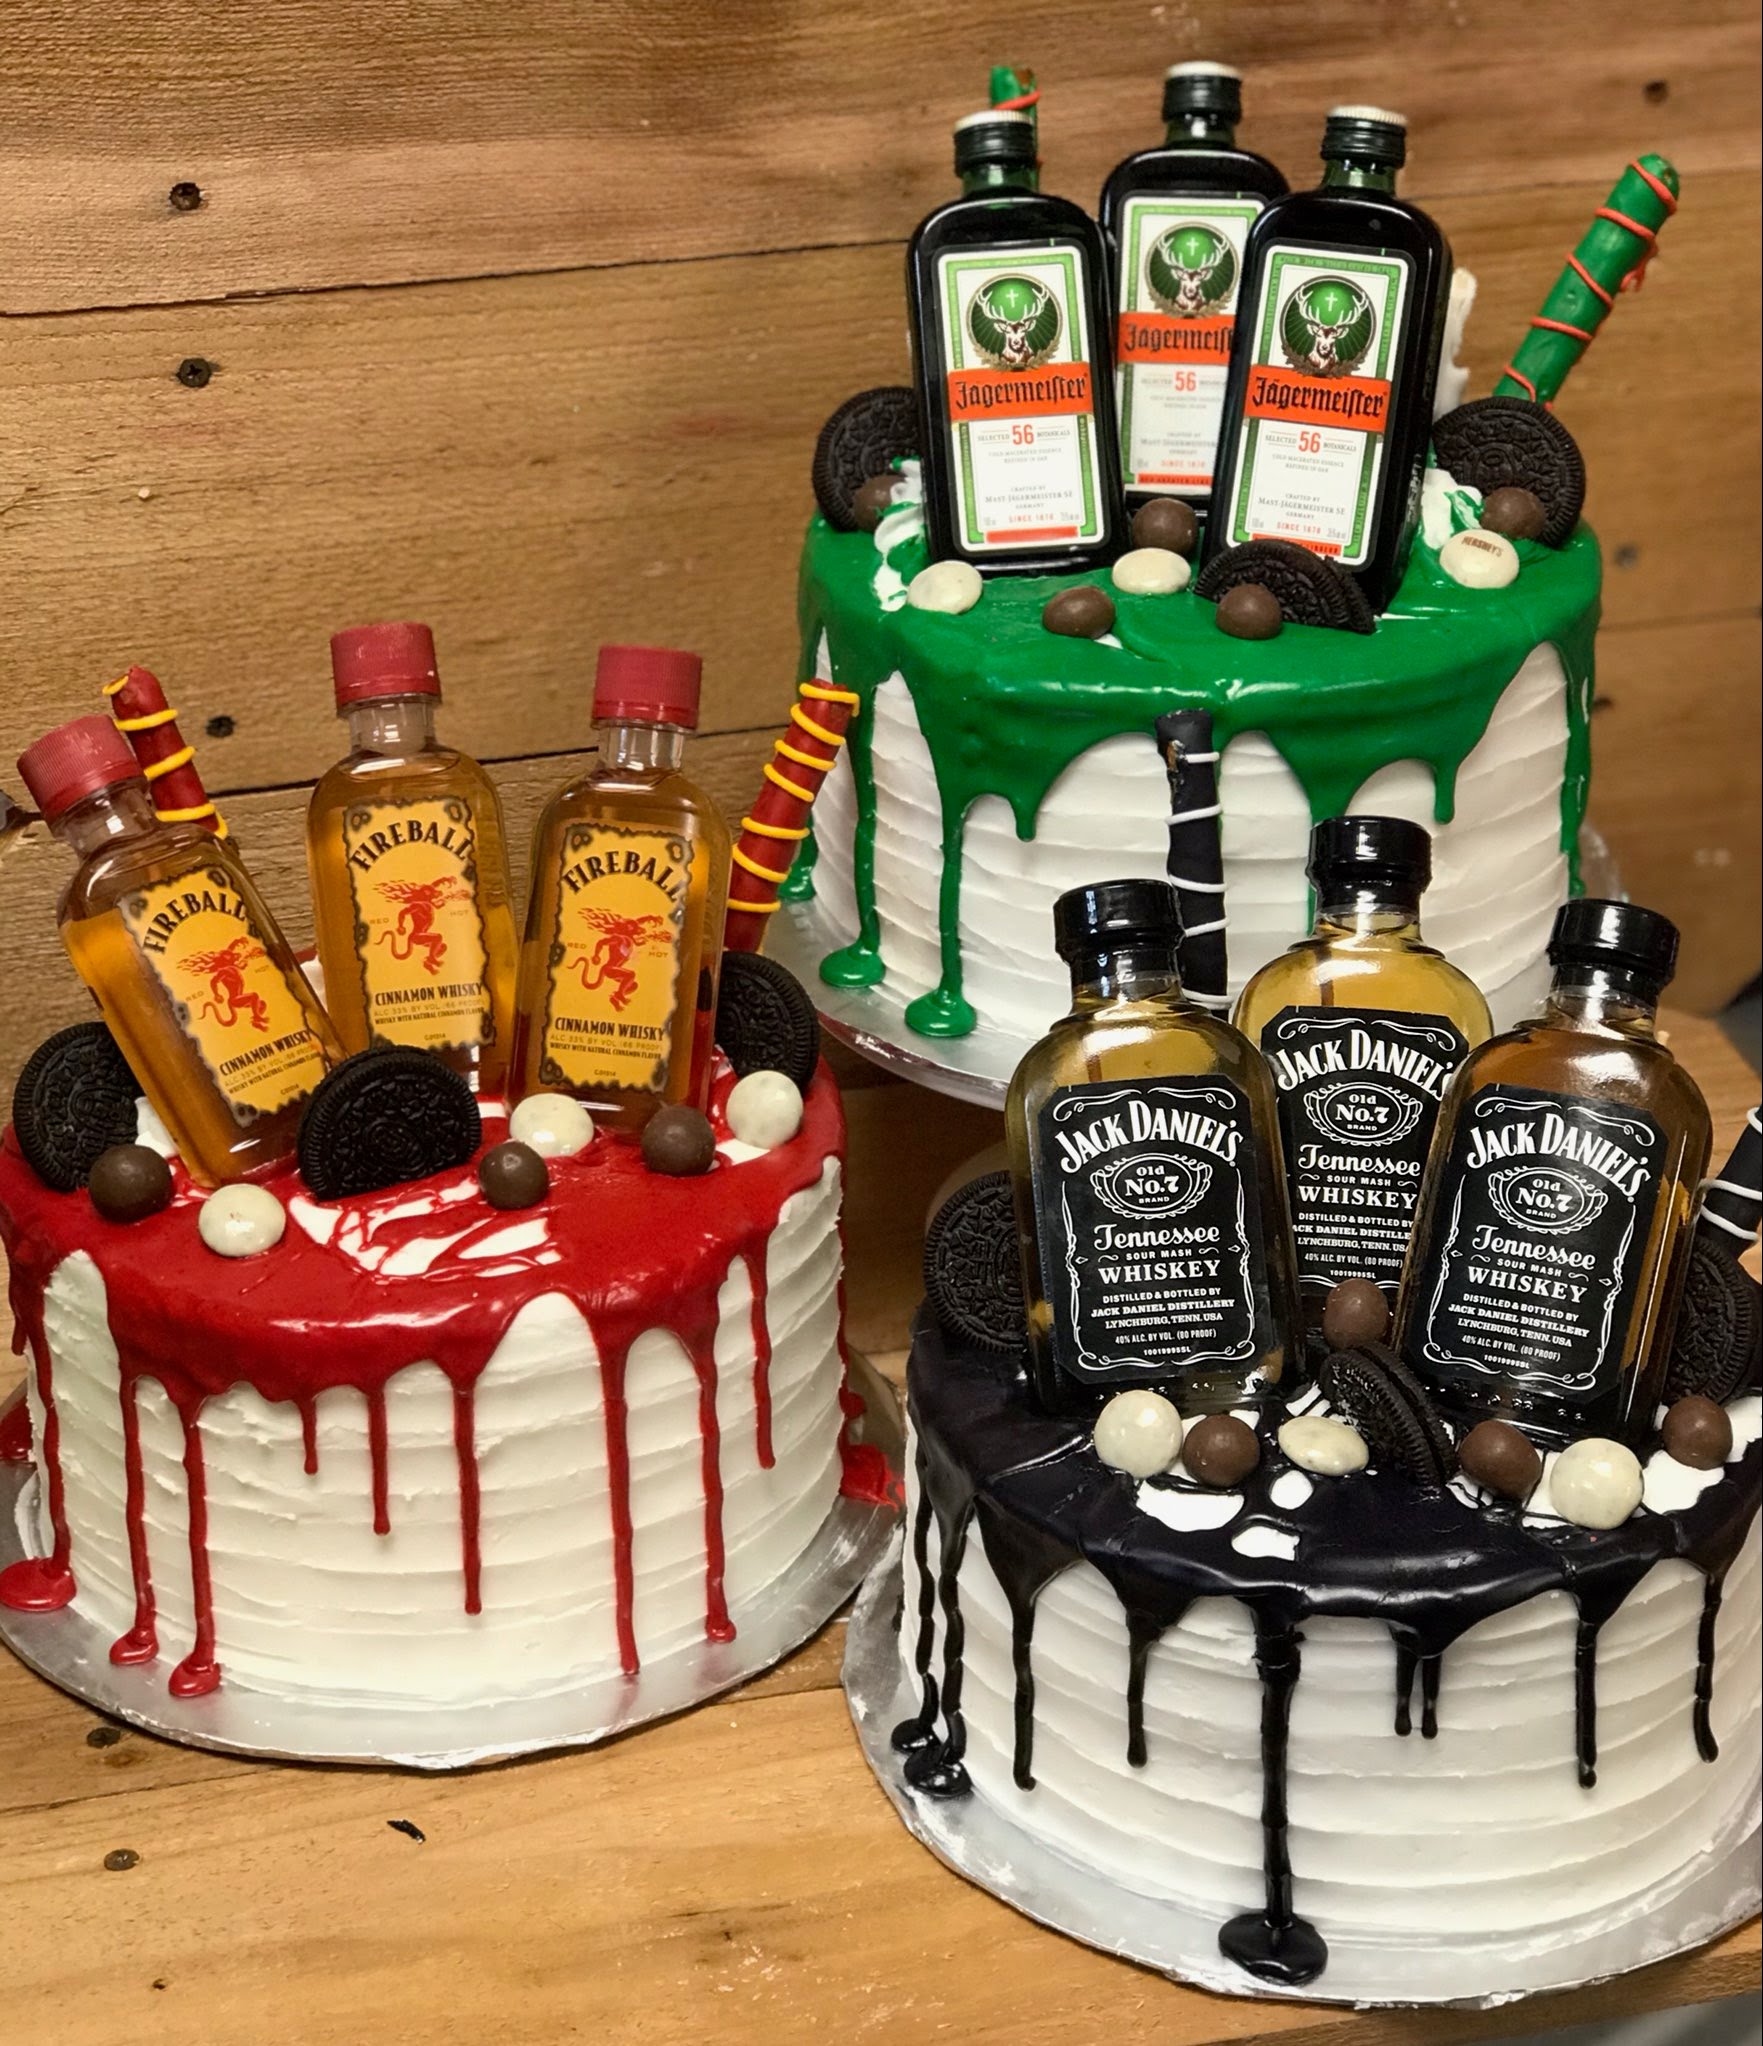 Patron Theme Cake - Alcohol Themed Birthday Cakes